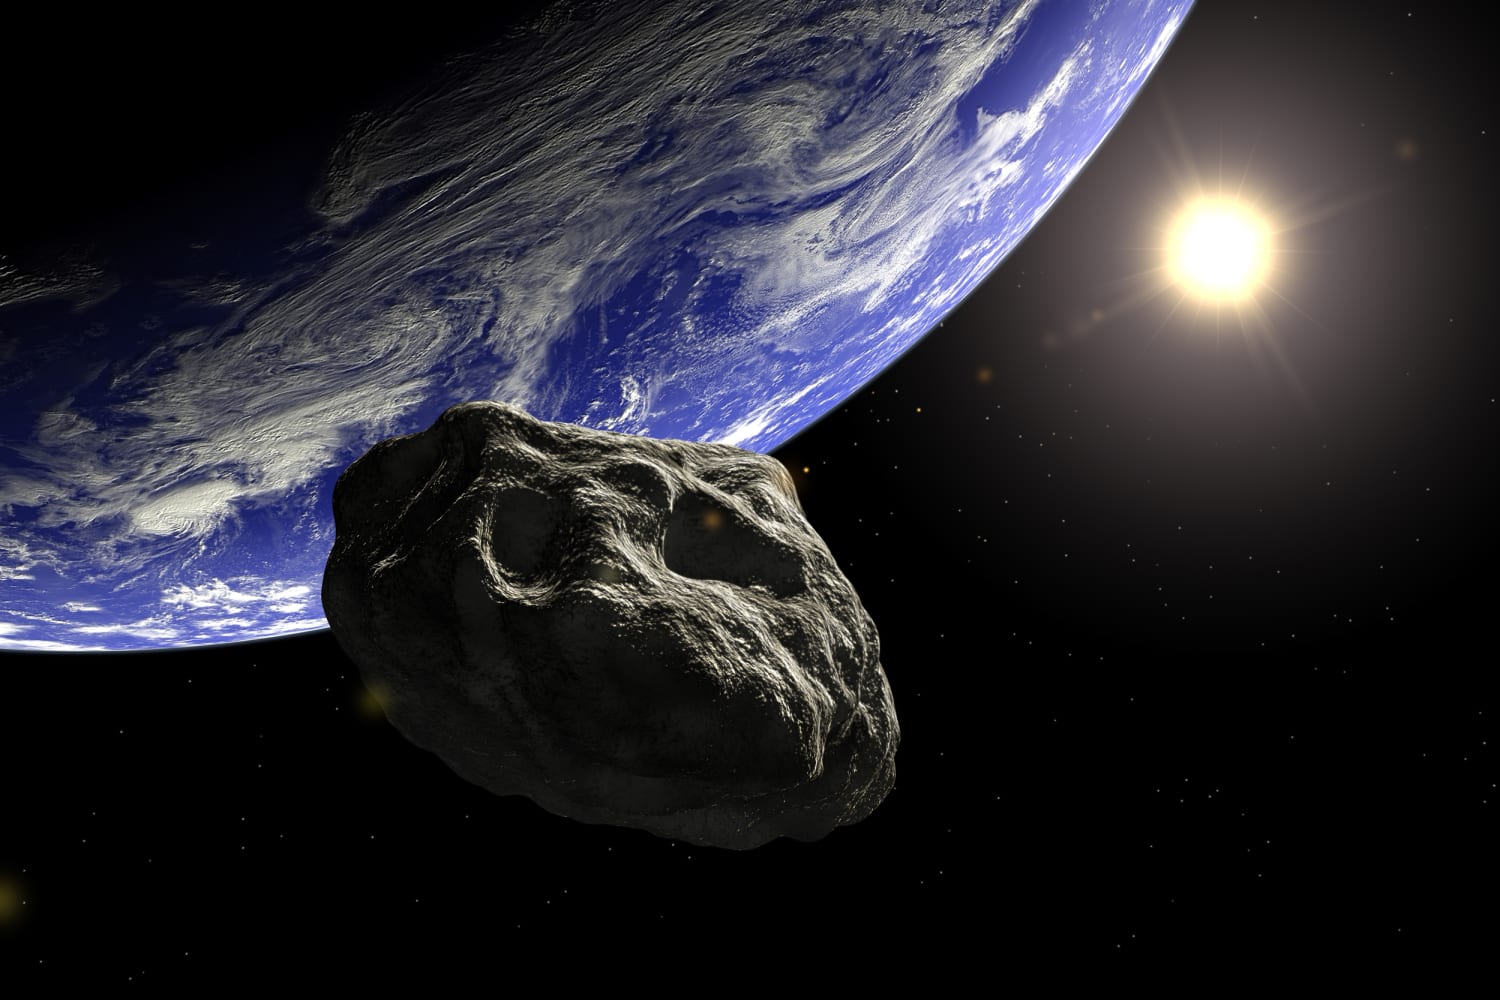 nasa asteroid impact earth 2022